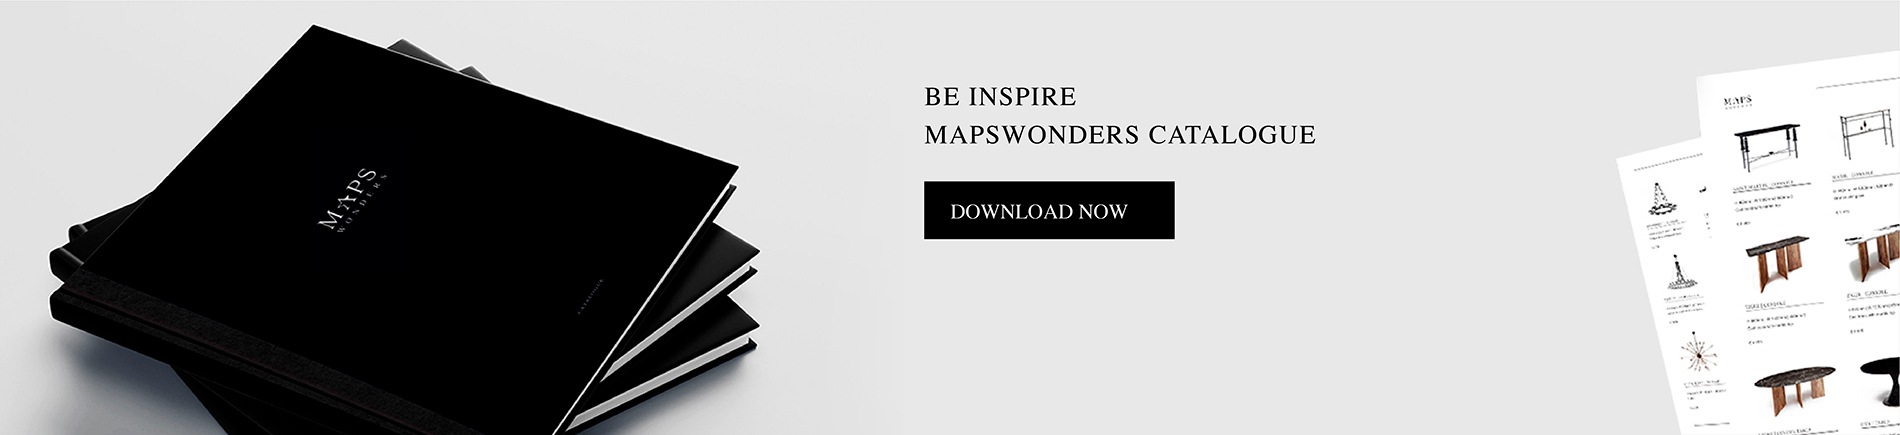 Mapswonders-Catalogue-Download-furniture-lighting